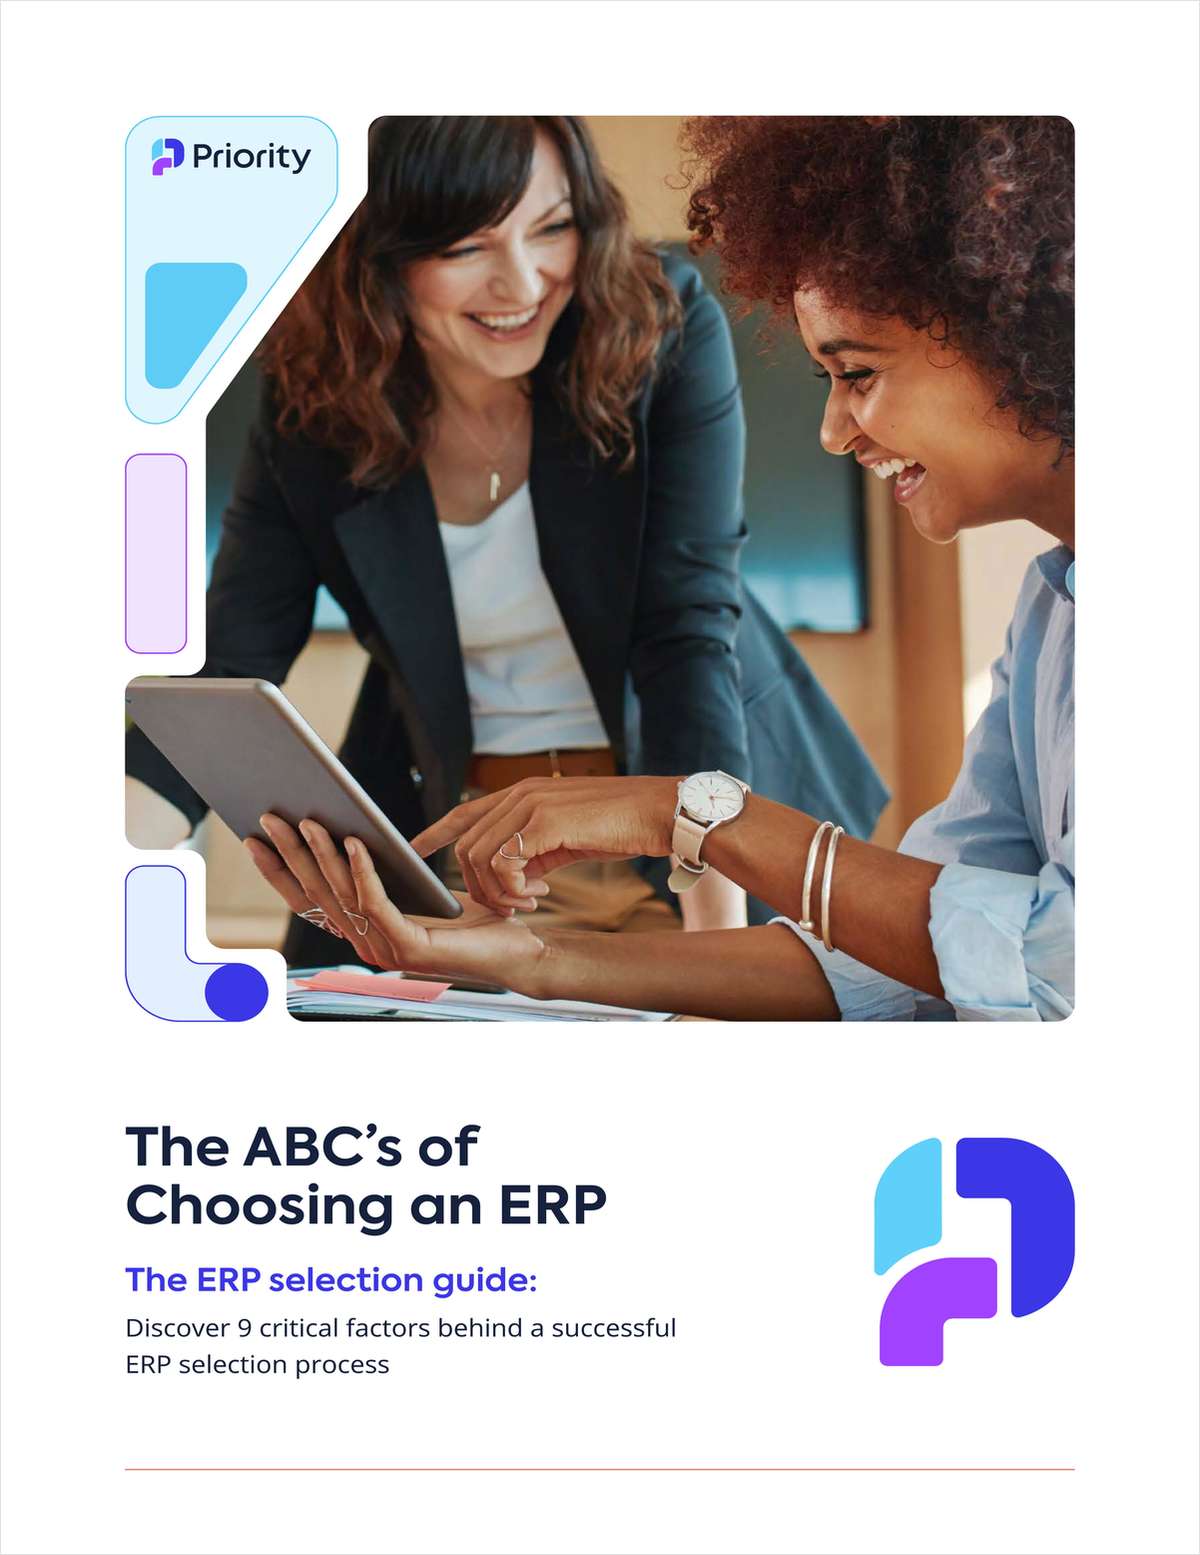 The ABC's of Choosing an ERP